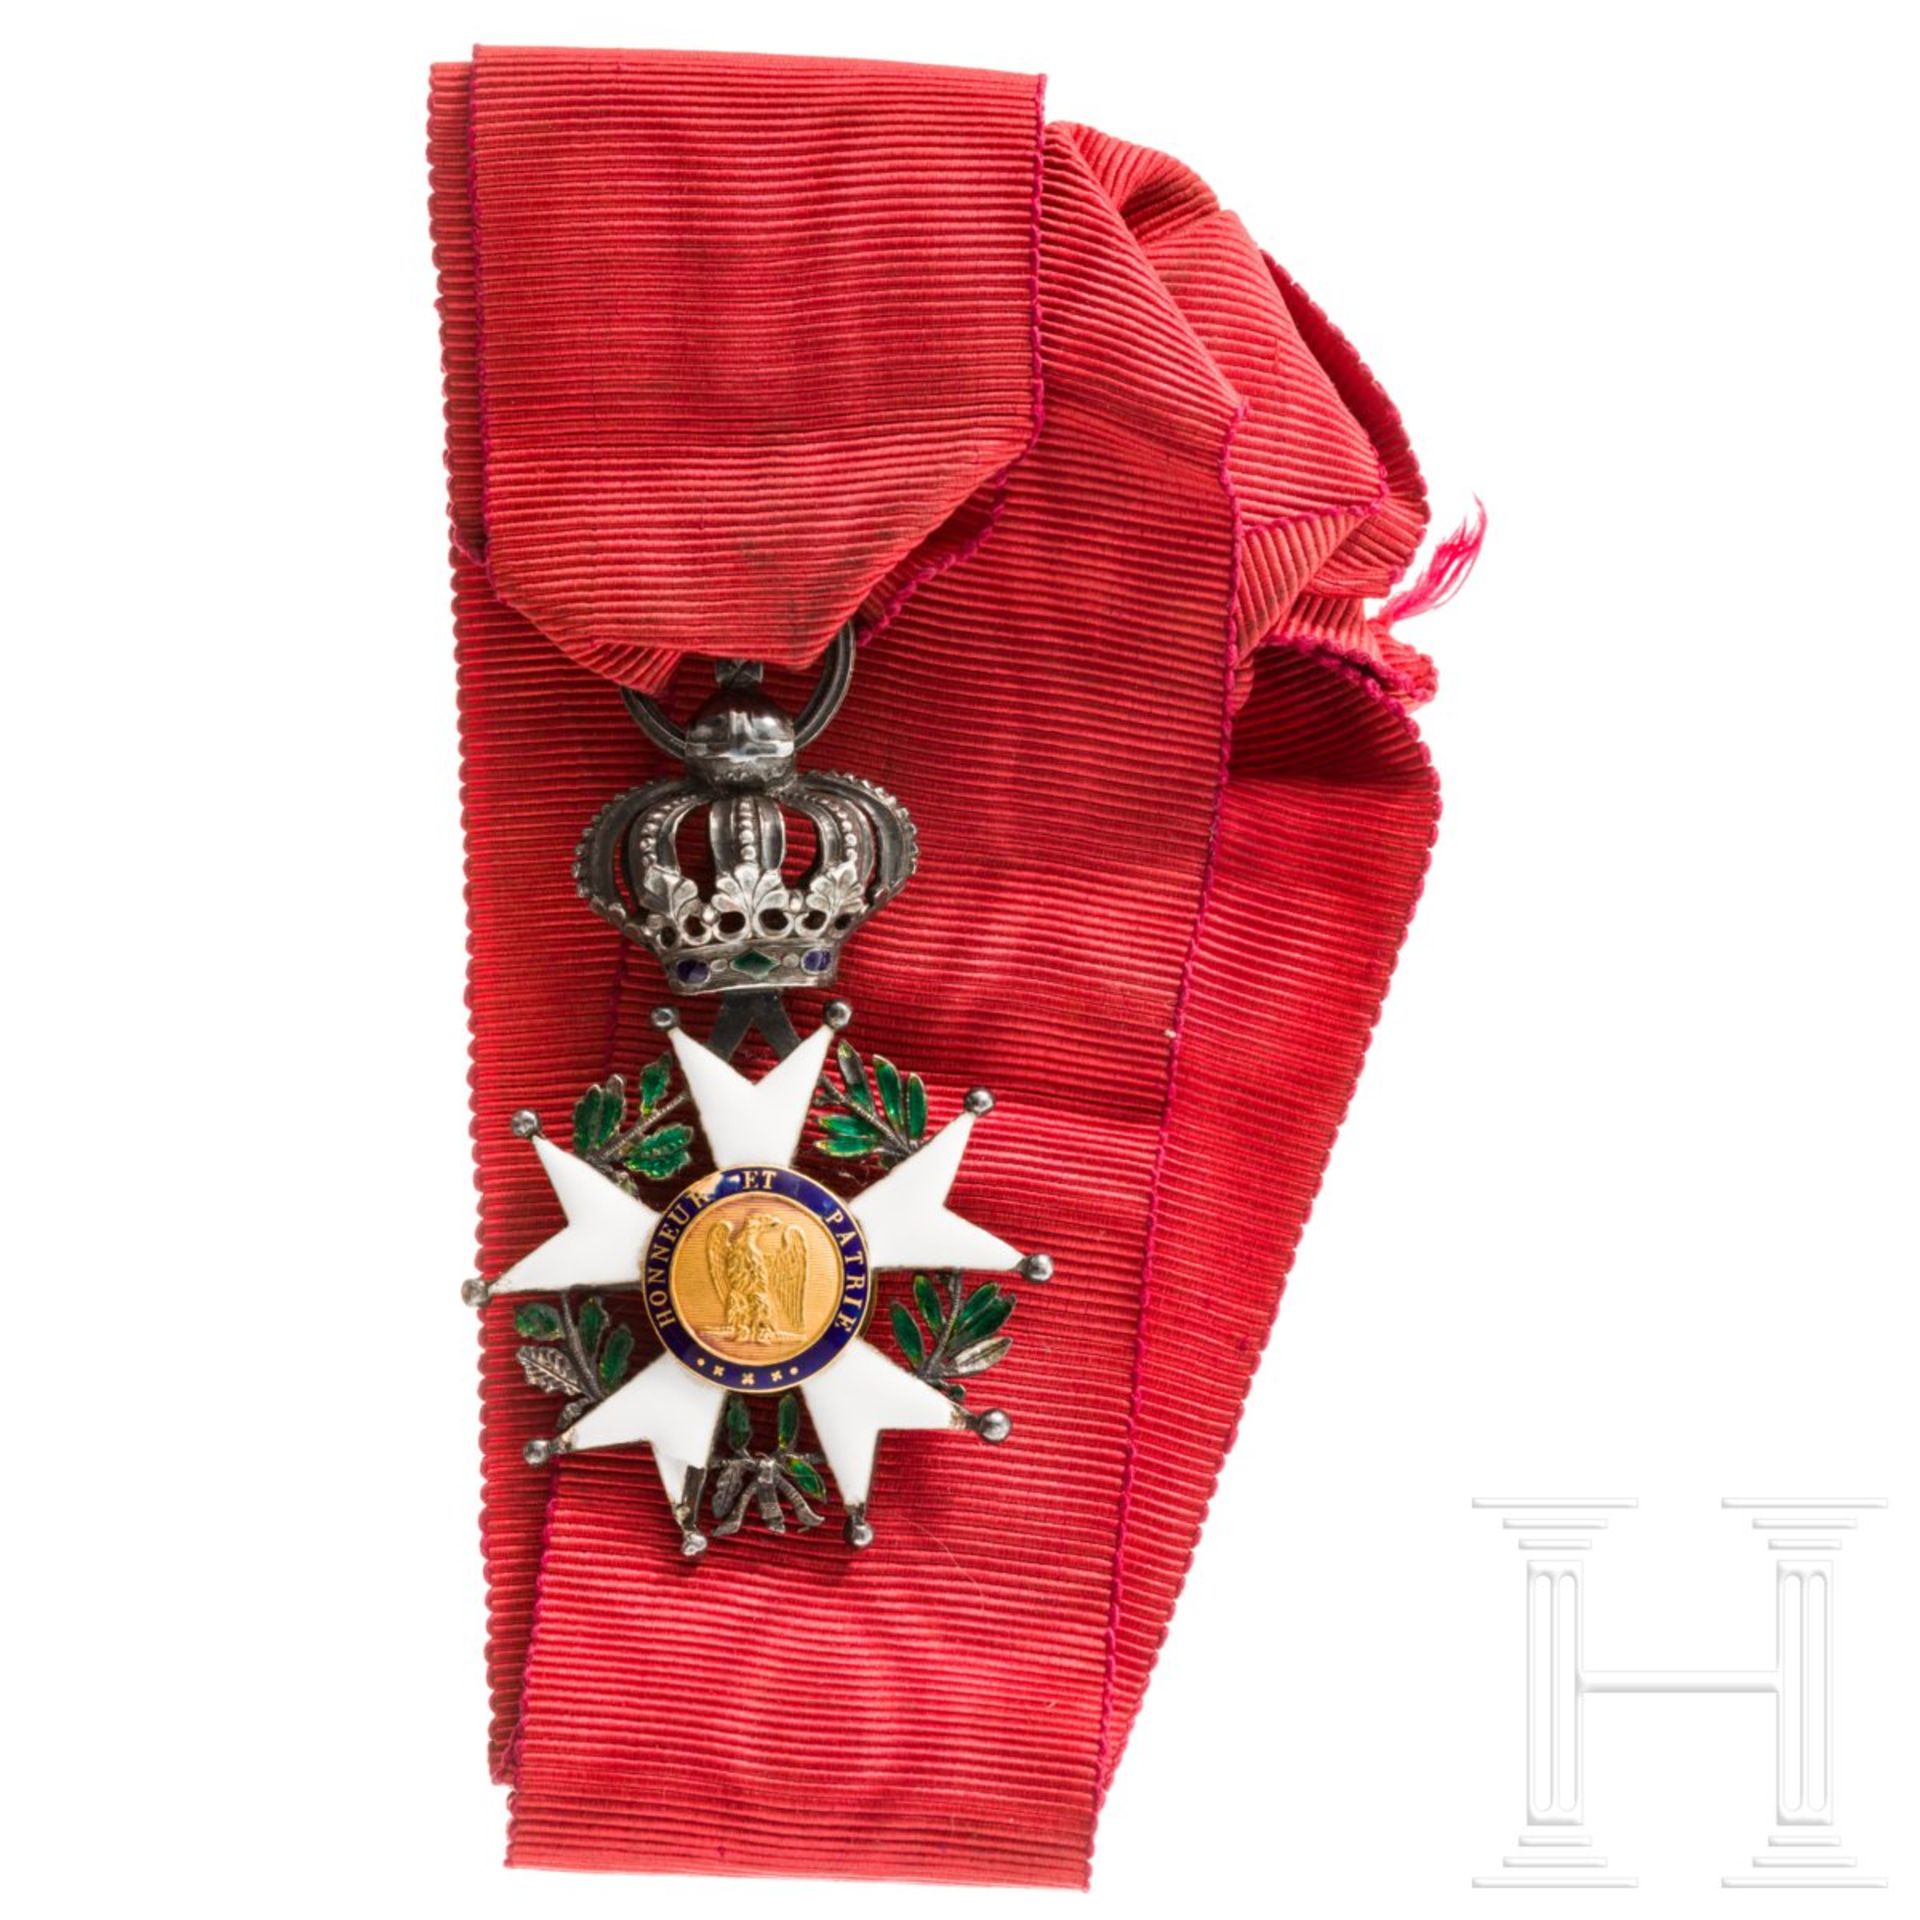 Orden der Ehrenlegion (Légion d'honneur) - Image 2 of 2